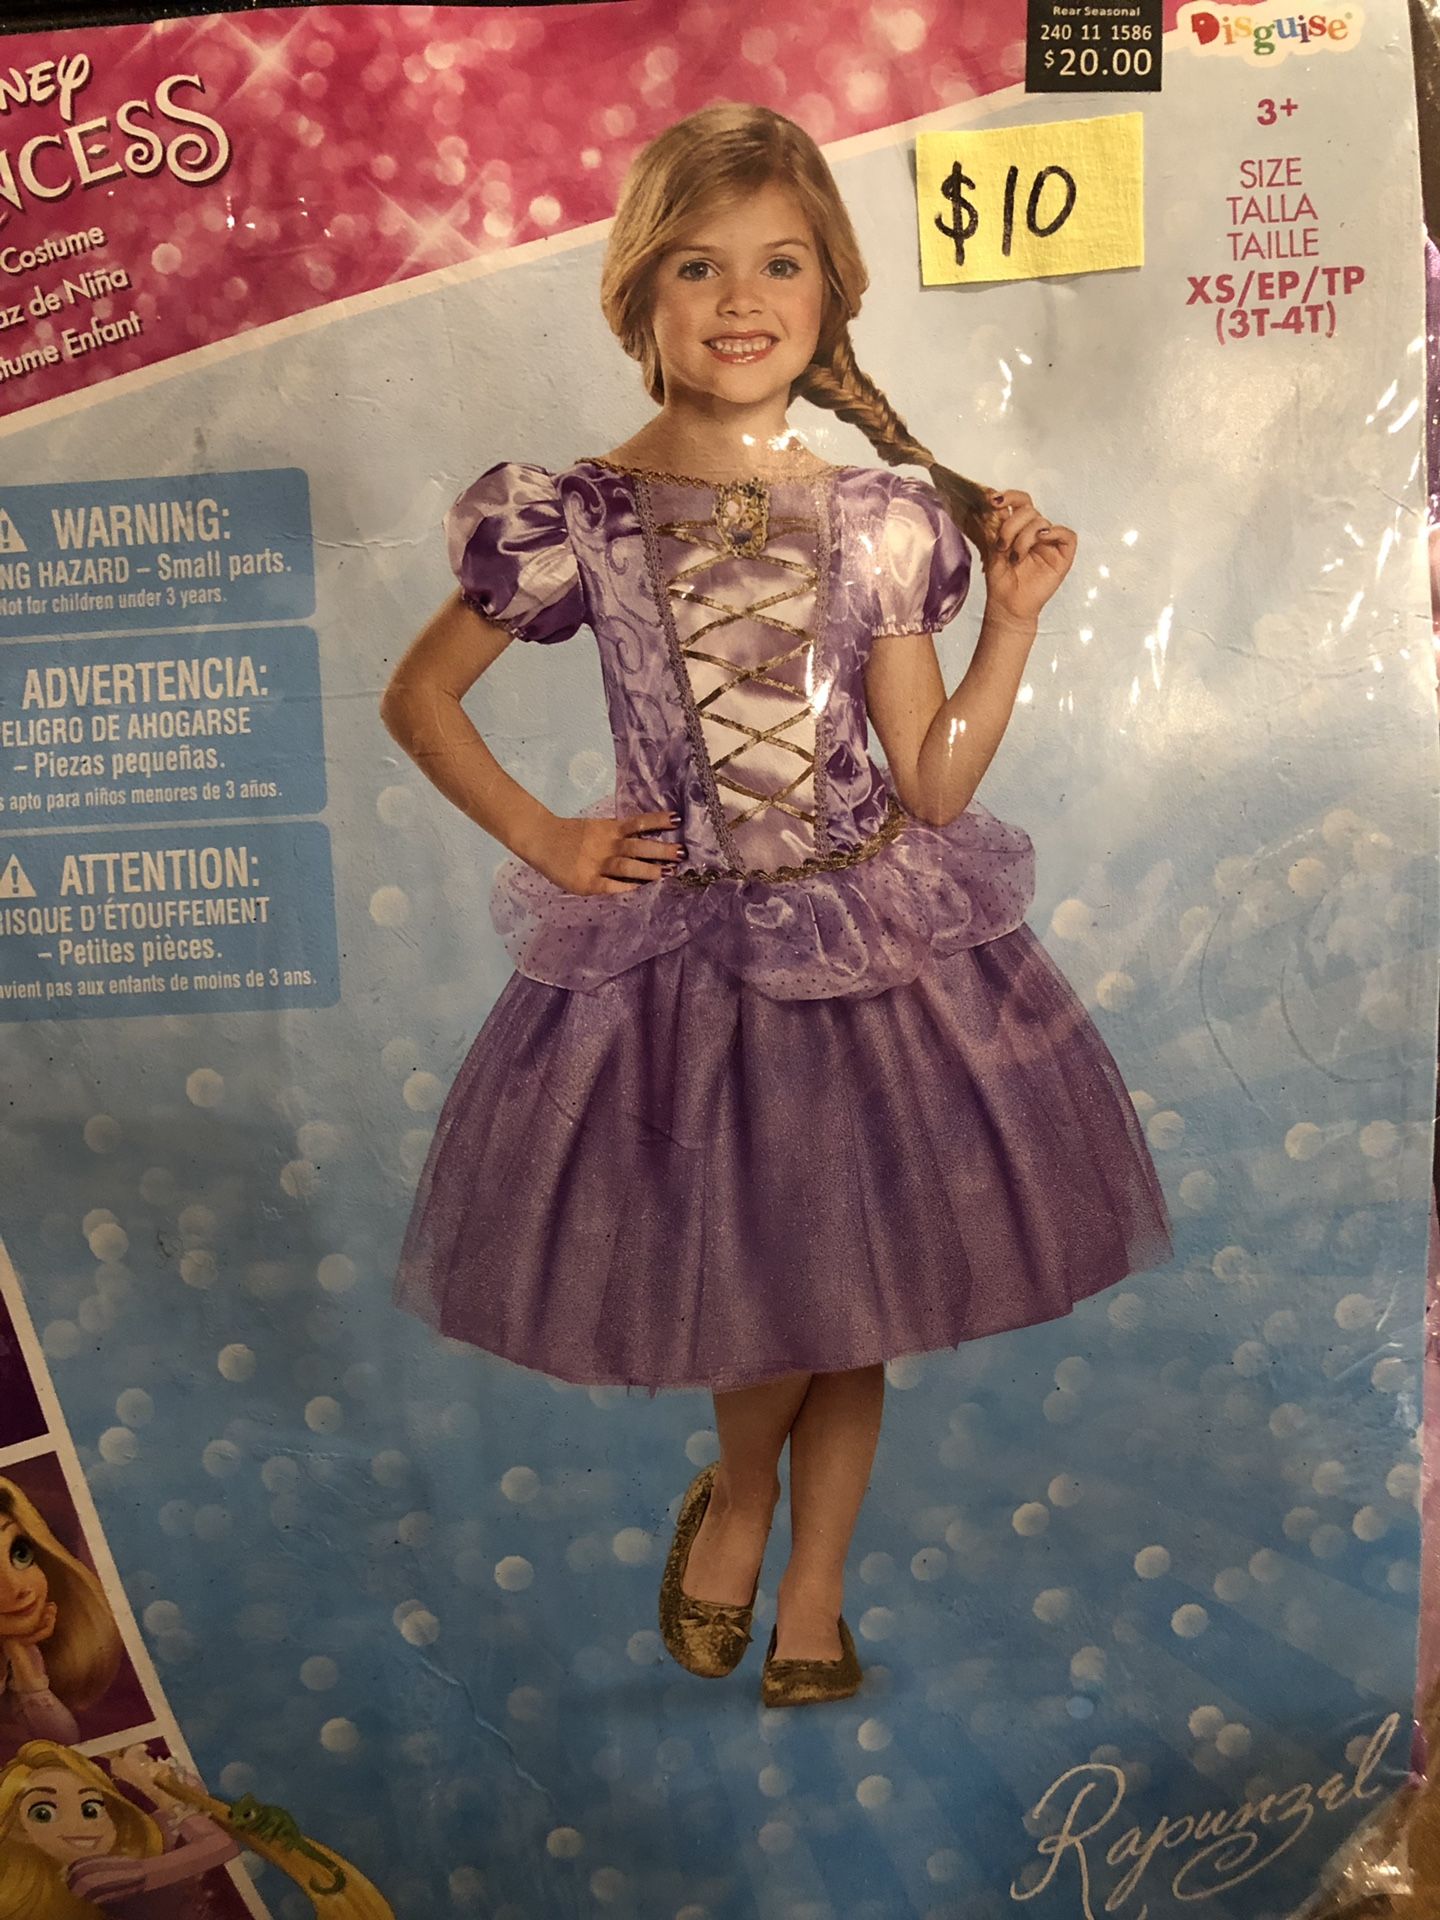 NEW Rapunzel Halloween Costume size 3-4T